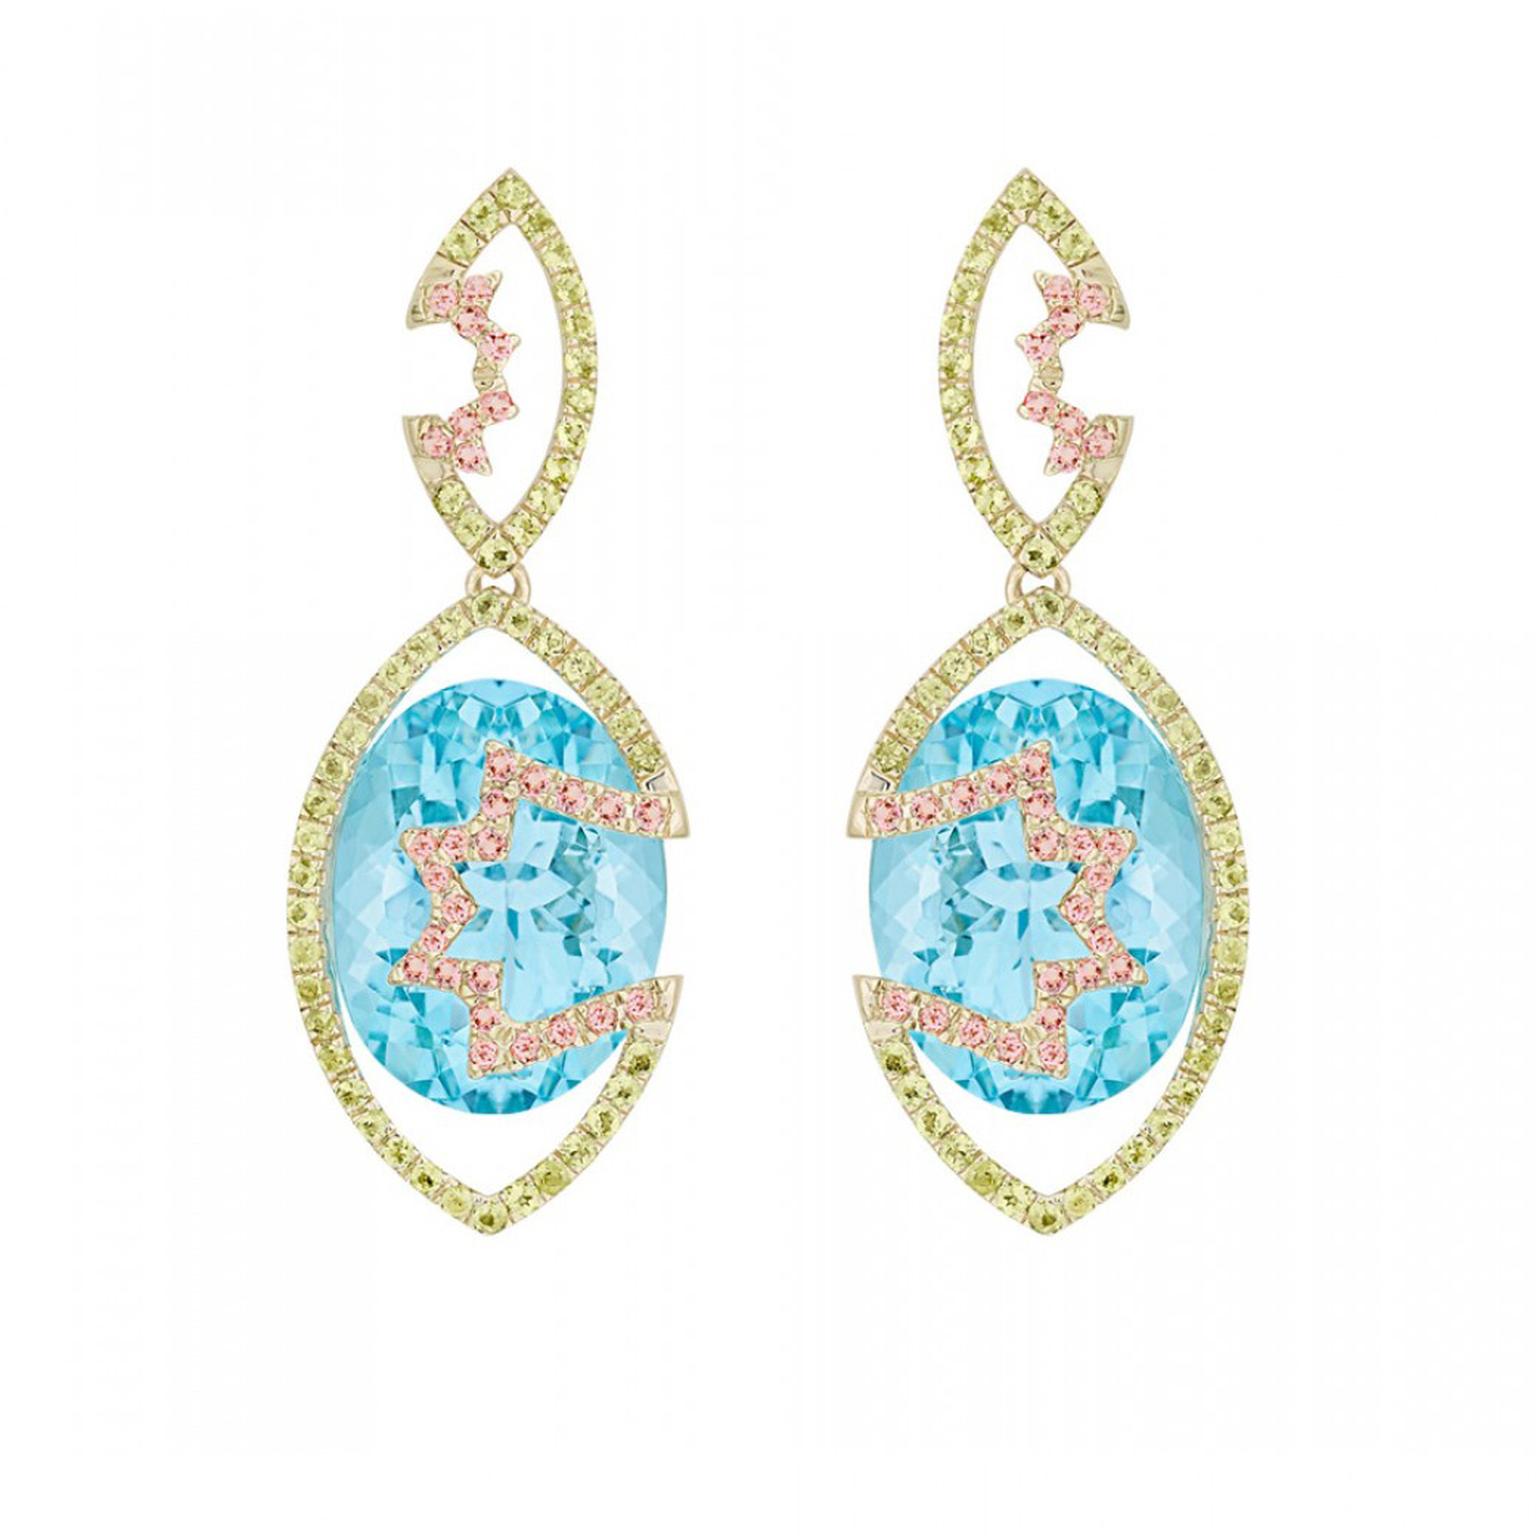 Arya Esha Swiss blue topaz earrings with tourmaline and peridot accents